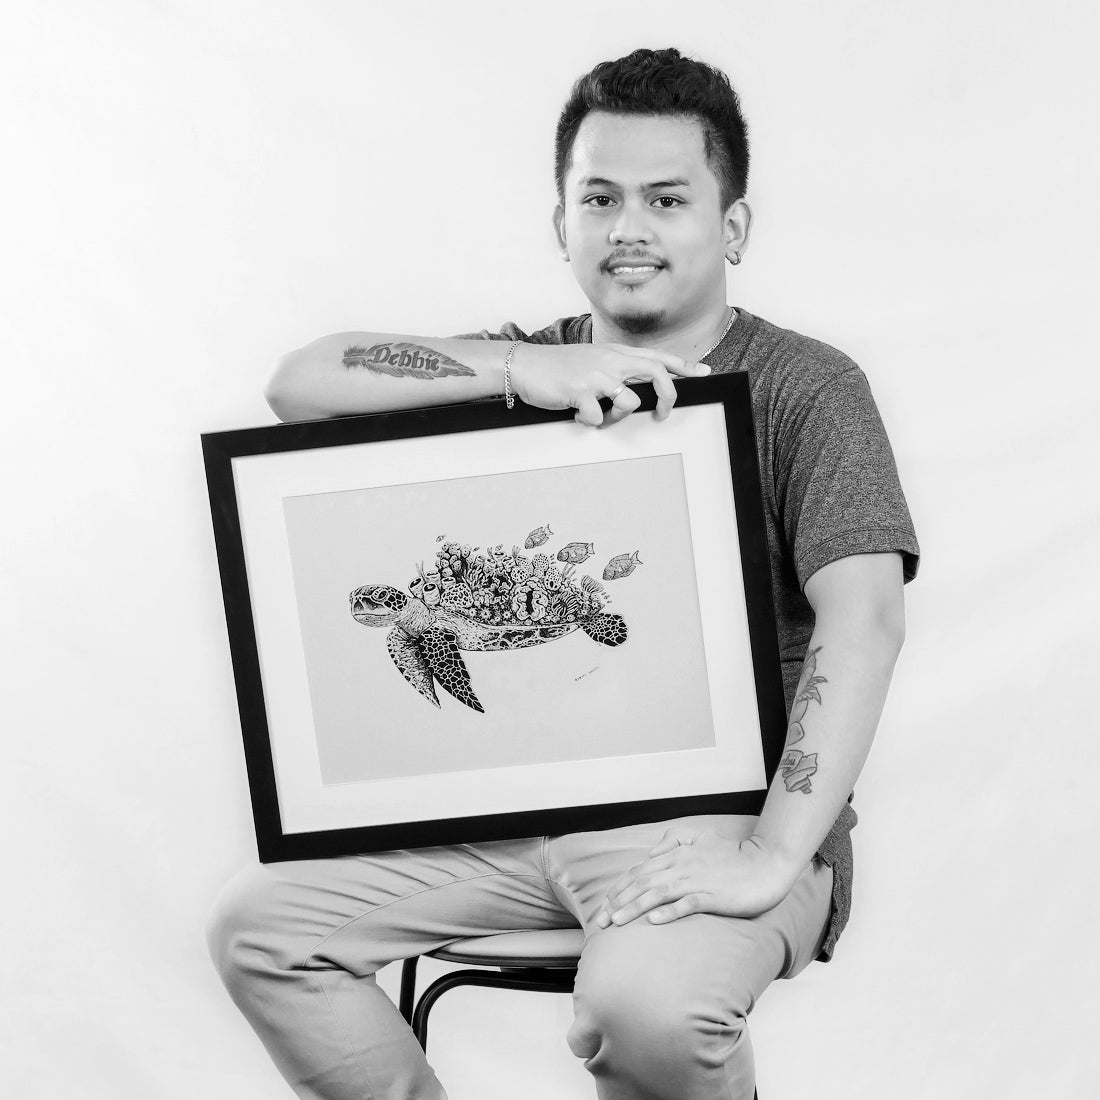 local pinoy Dumaguete artist art drawing painting sea ocean creature ink pen